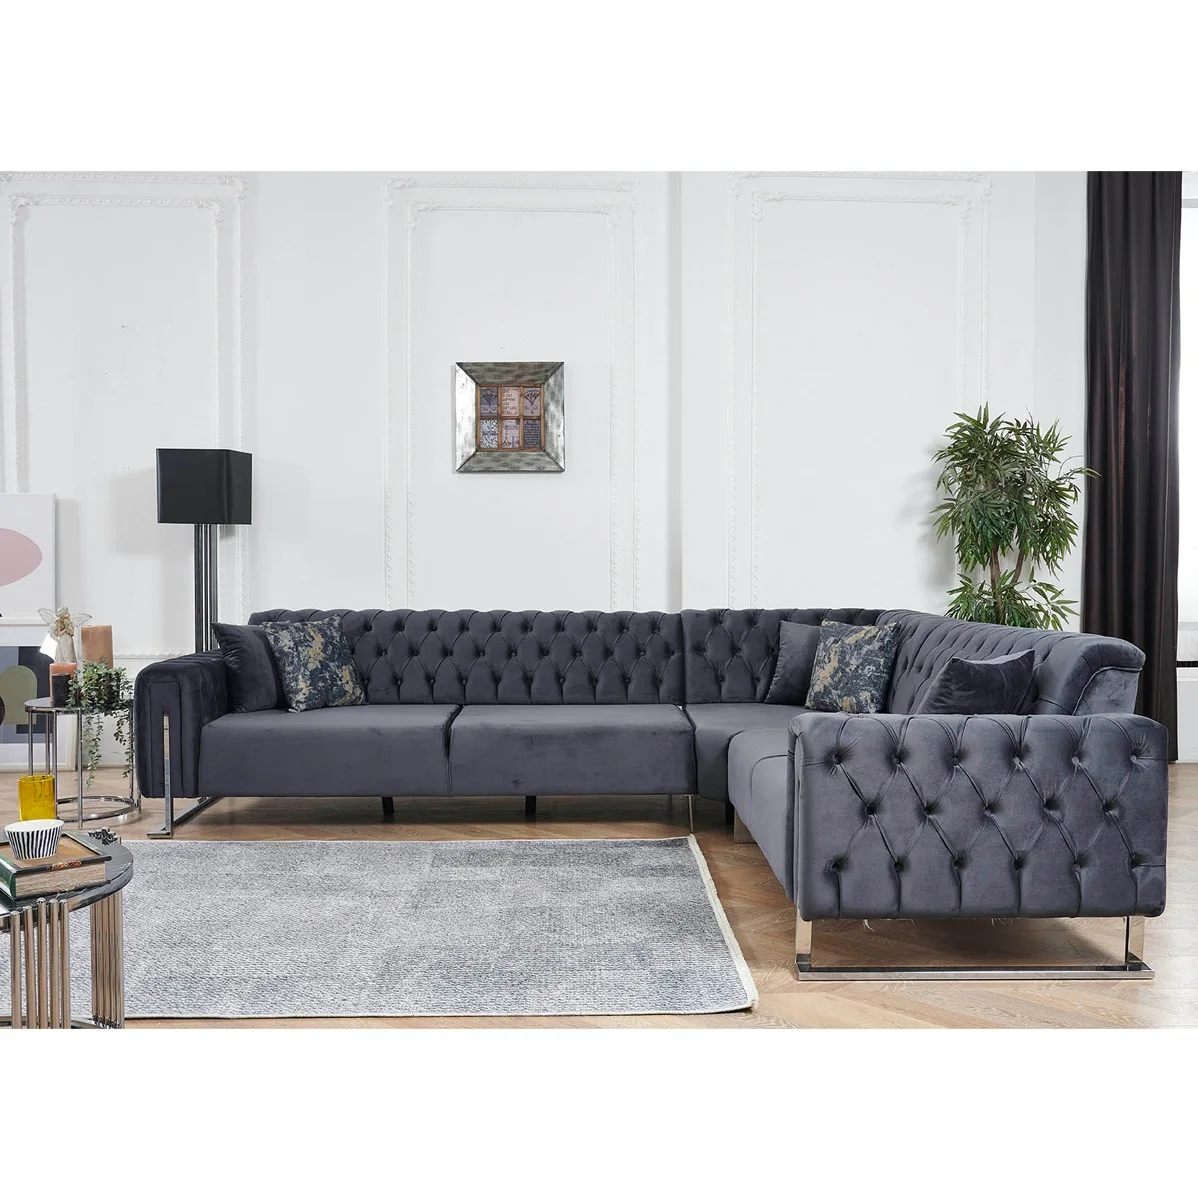 Furniture Luxury Wholesale Factory made Sofa Modern Design High Quality Sofa Manufacturer Direct Selling Sofa Elegant